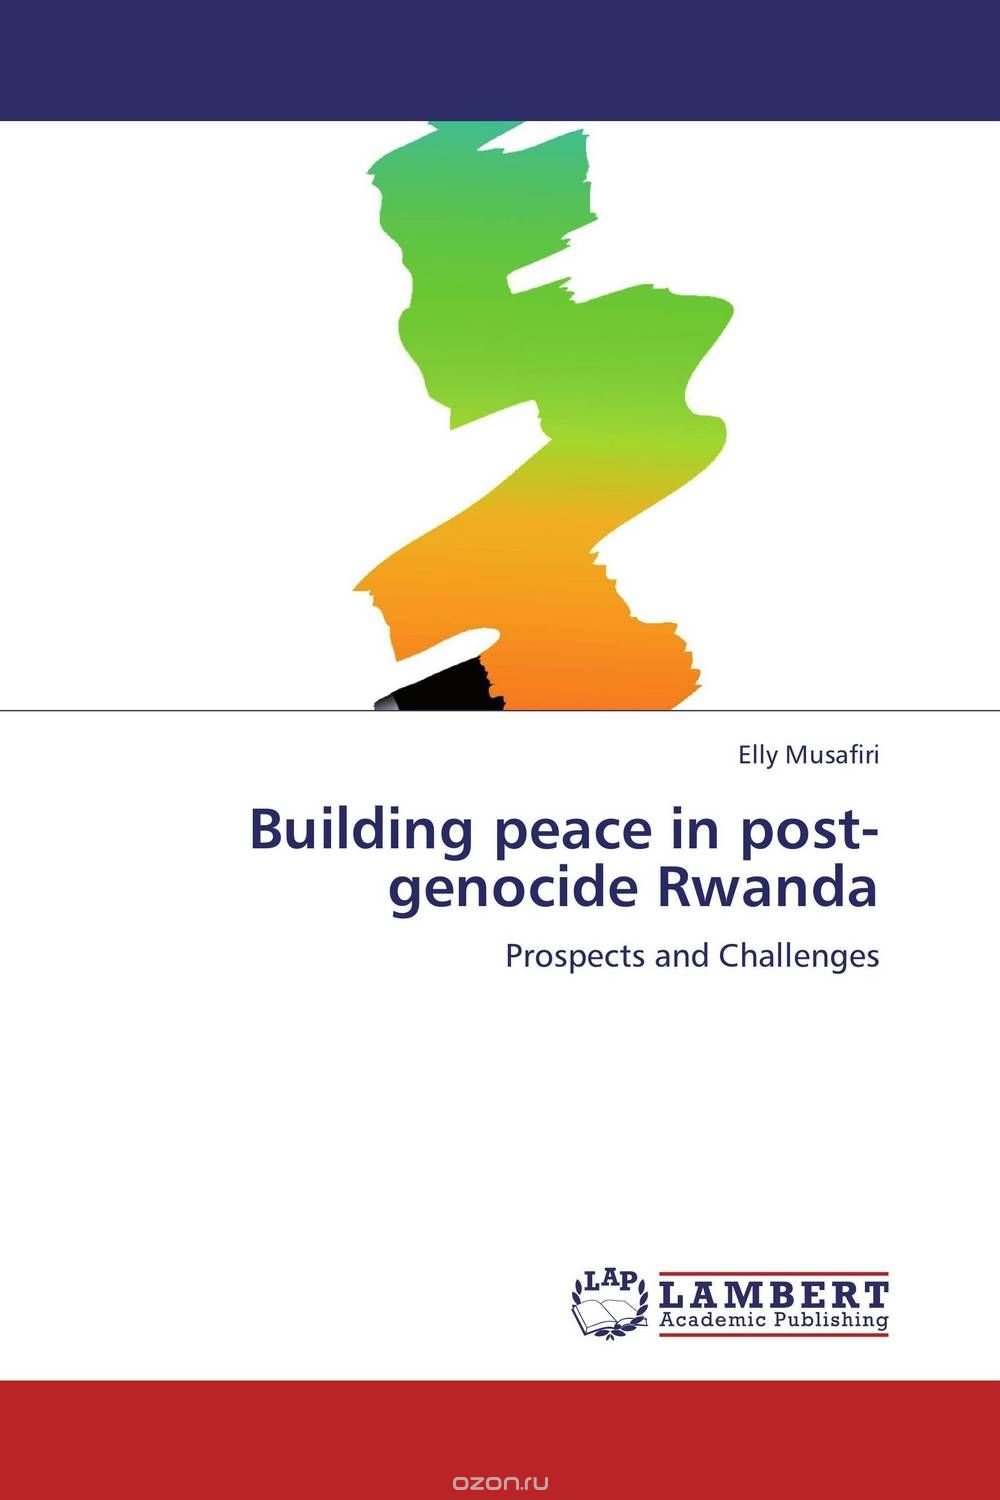 Скачать книгу "Building peace in post-genocide Rwanda"